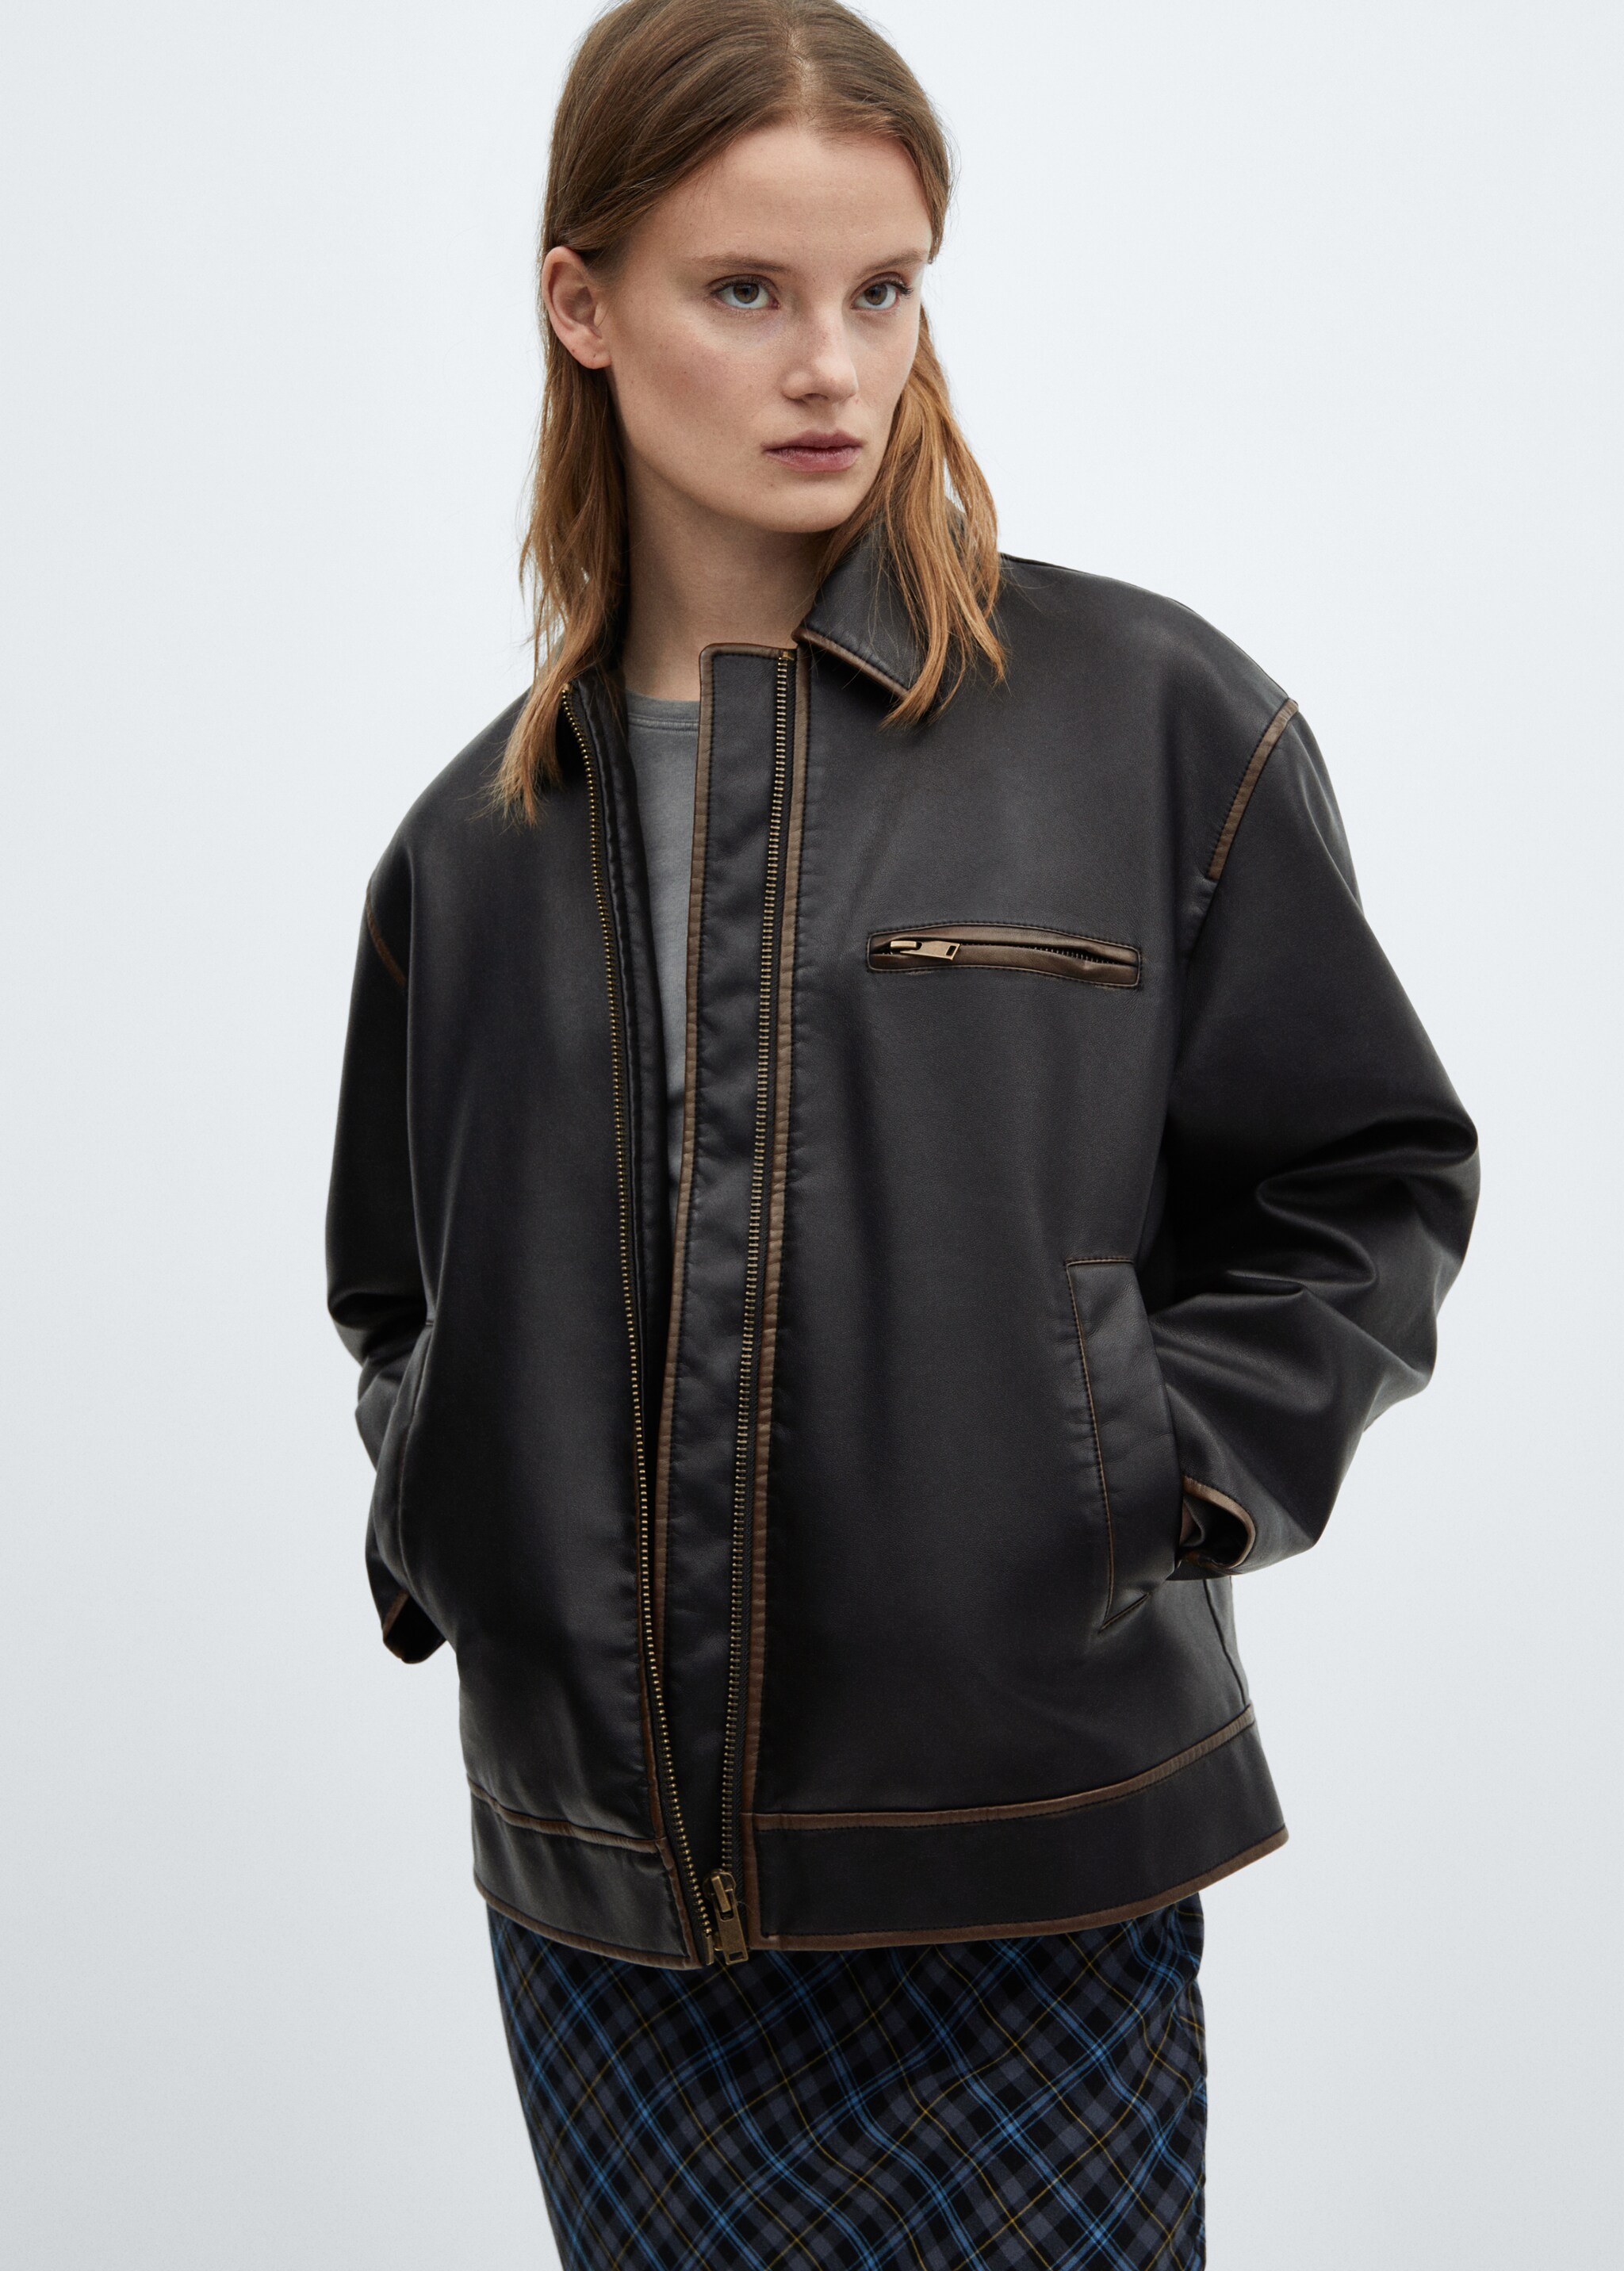 Worn leather effect jacket - Medium plane